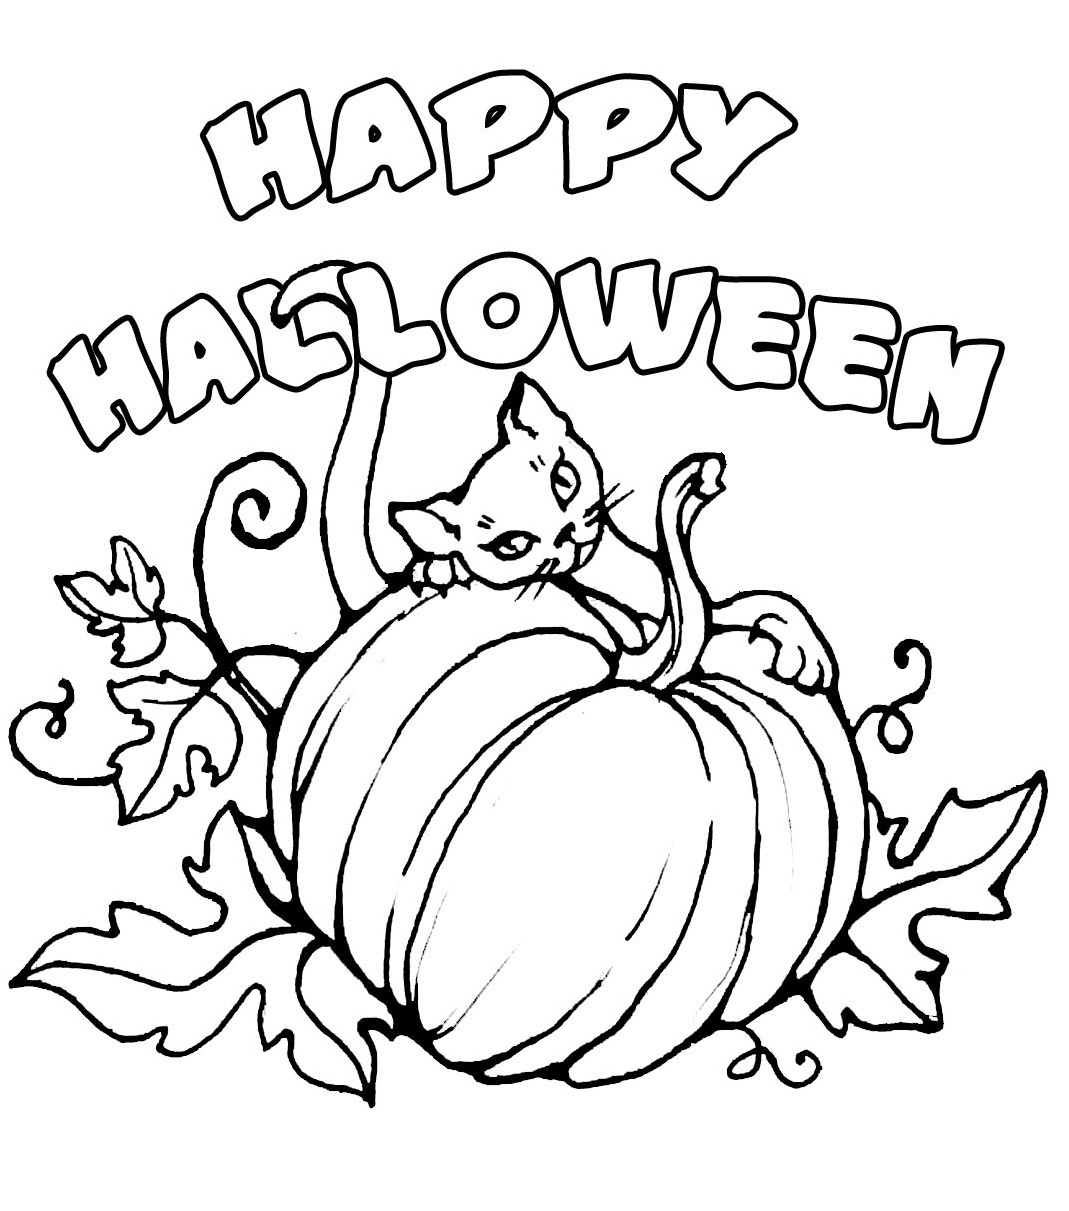 Printable Halloween Coloring Pages
 Printable Happy Halloween 2019 coloring pages for Kids